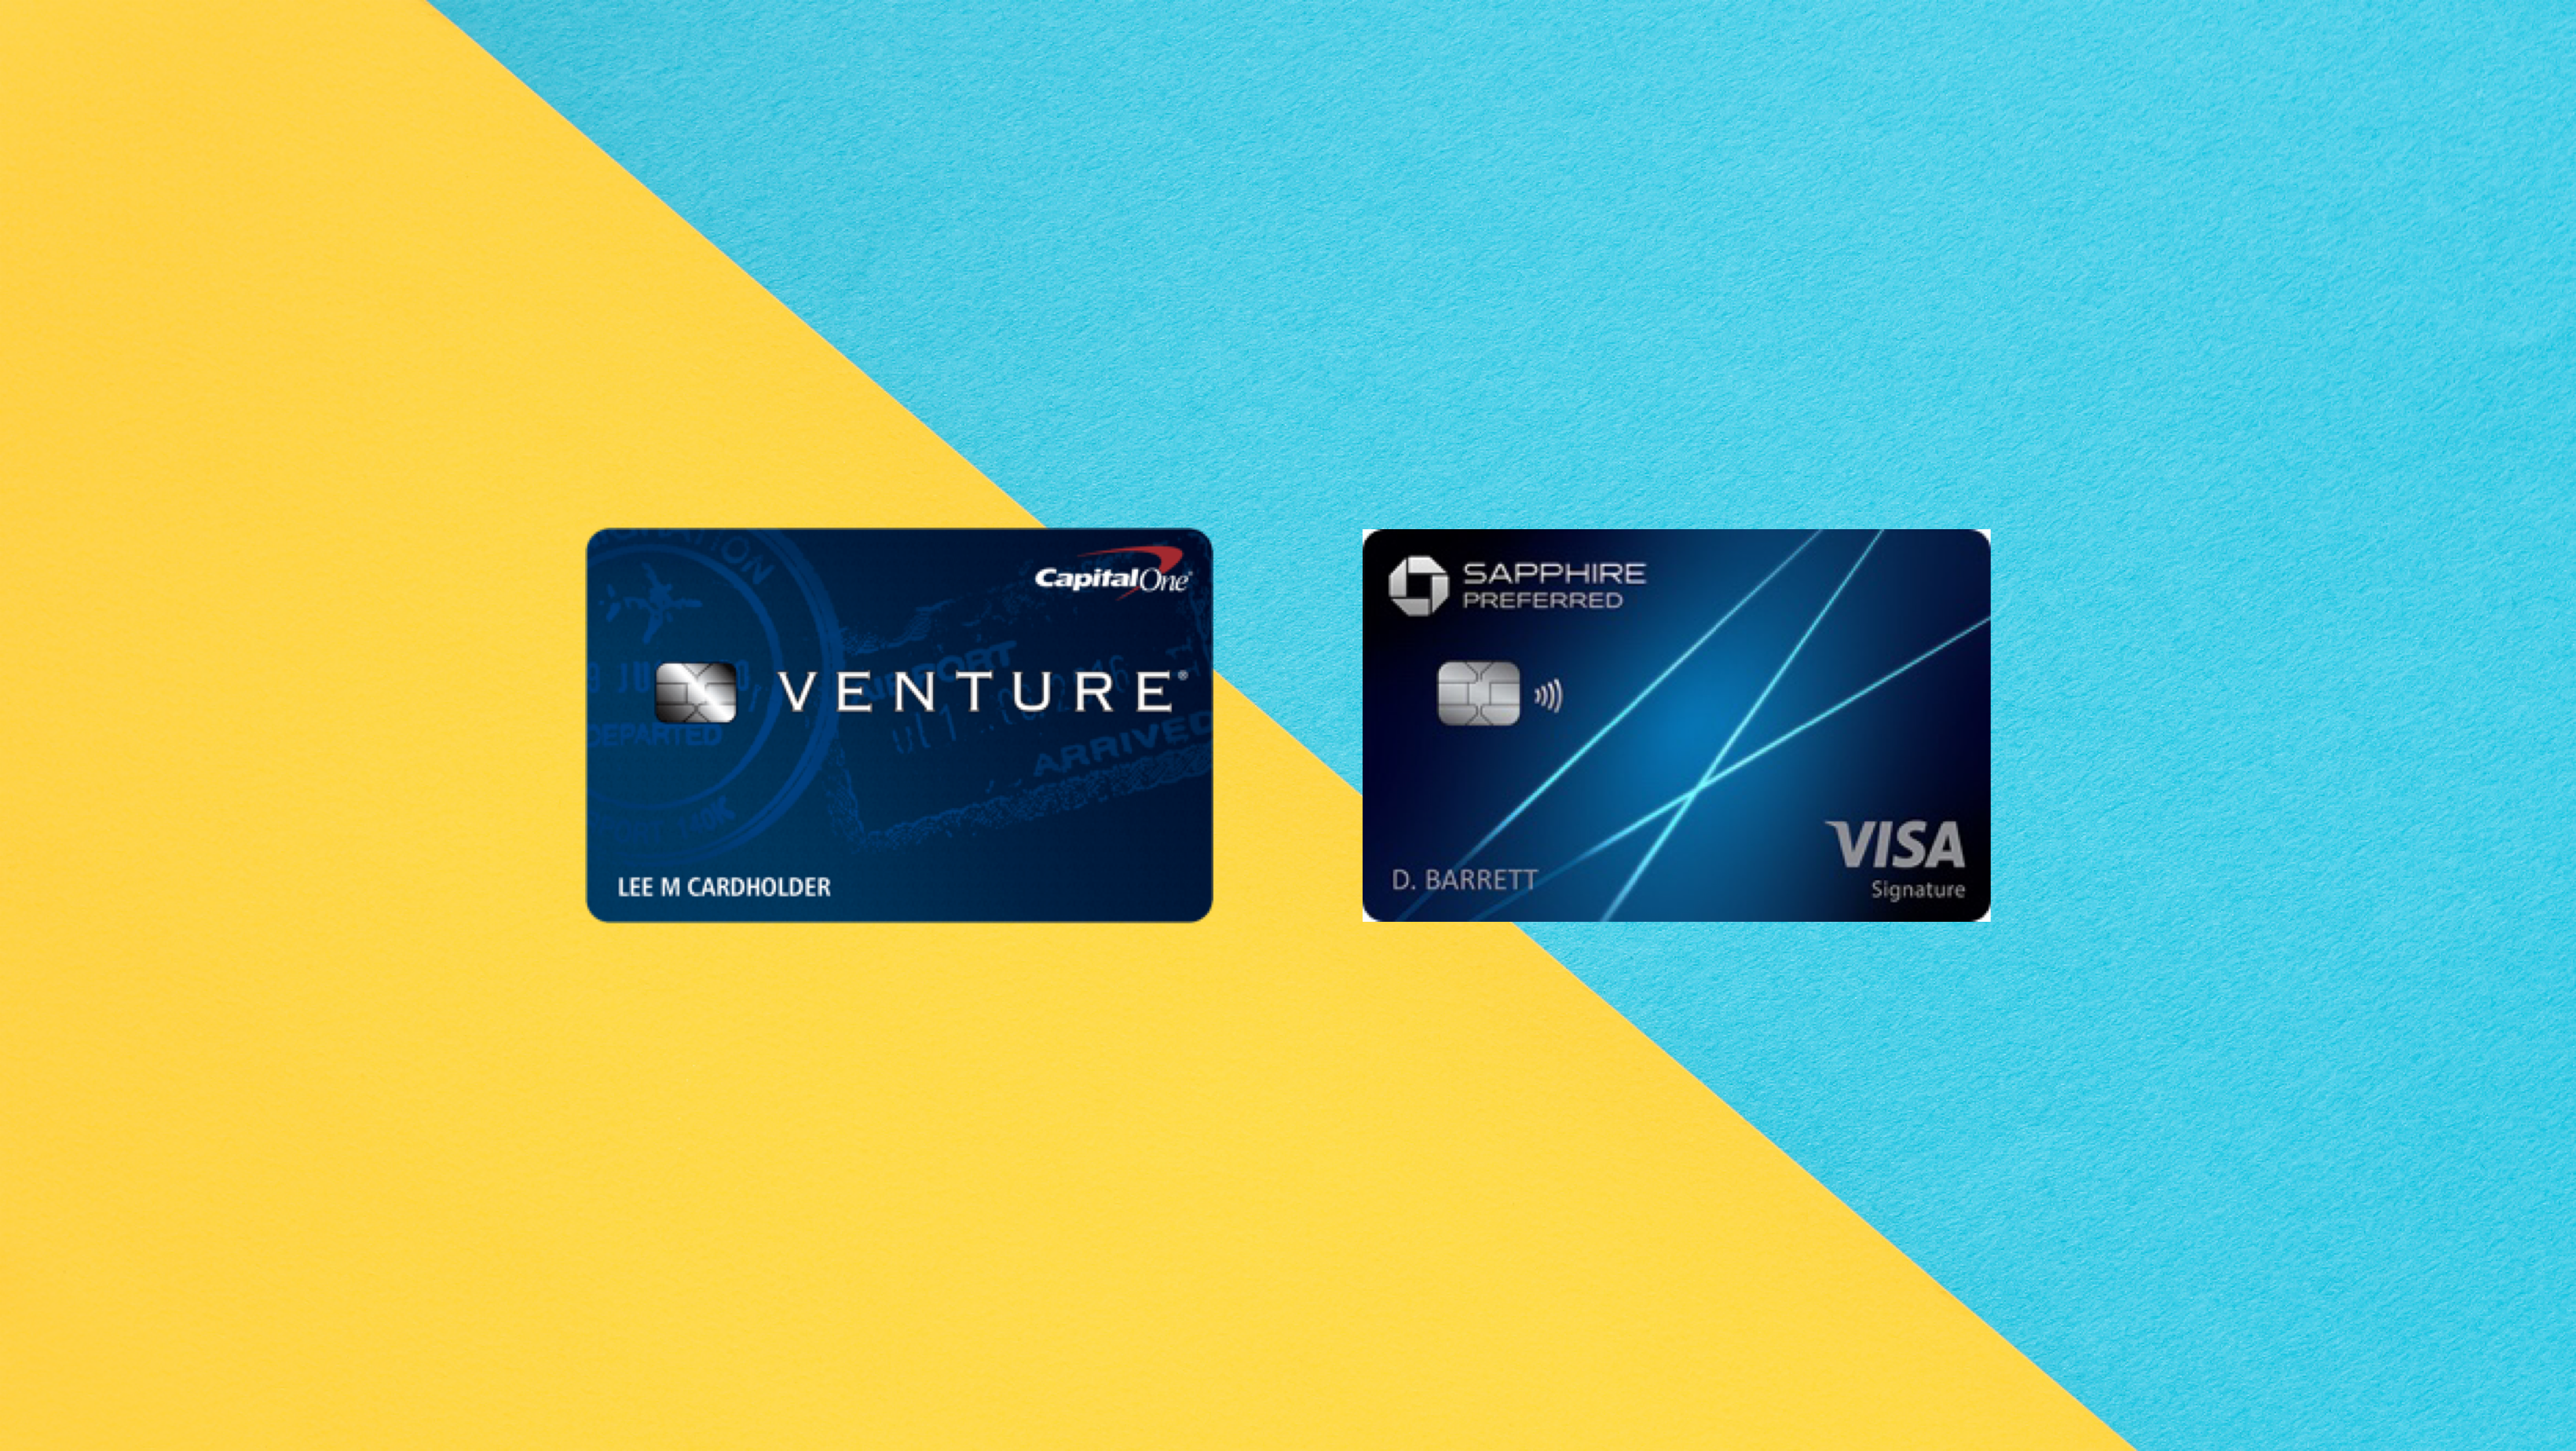 Chase Sapphire Preferred vs Capital One Venture Card